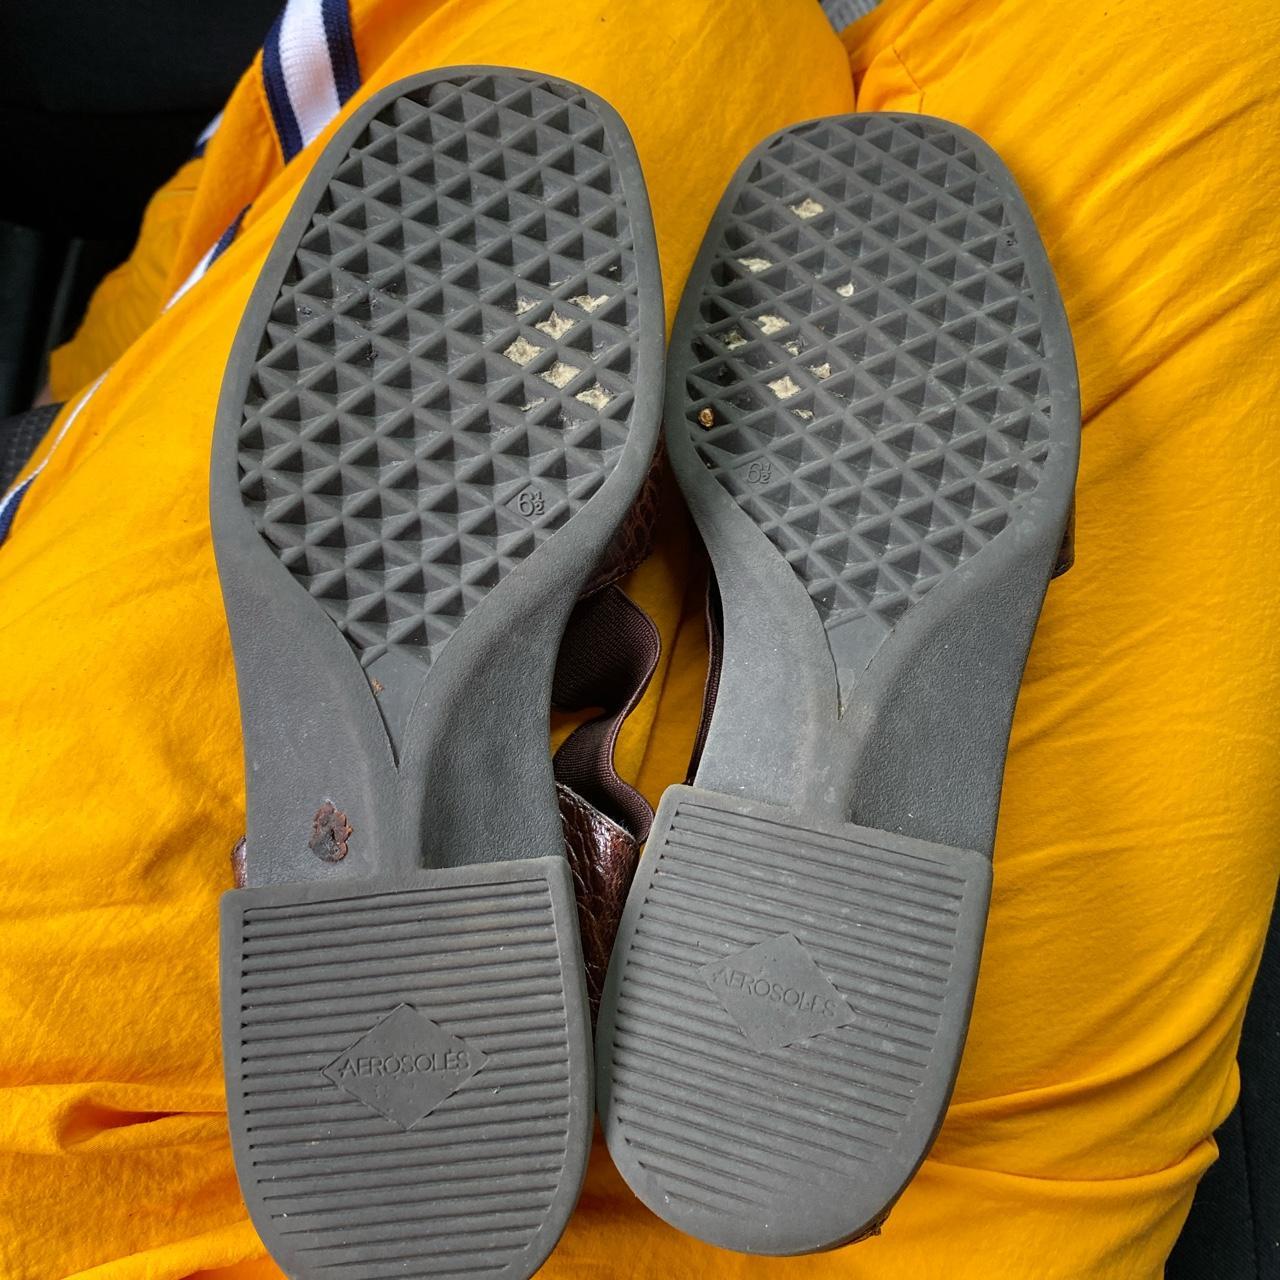 Aerosoles Women's Brown Sandals (3)